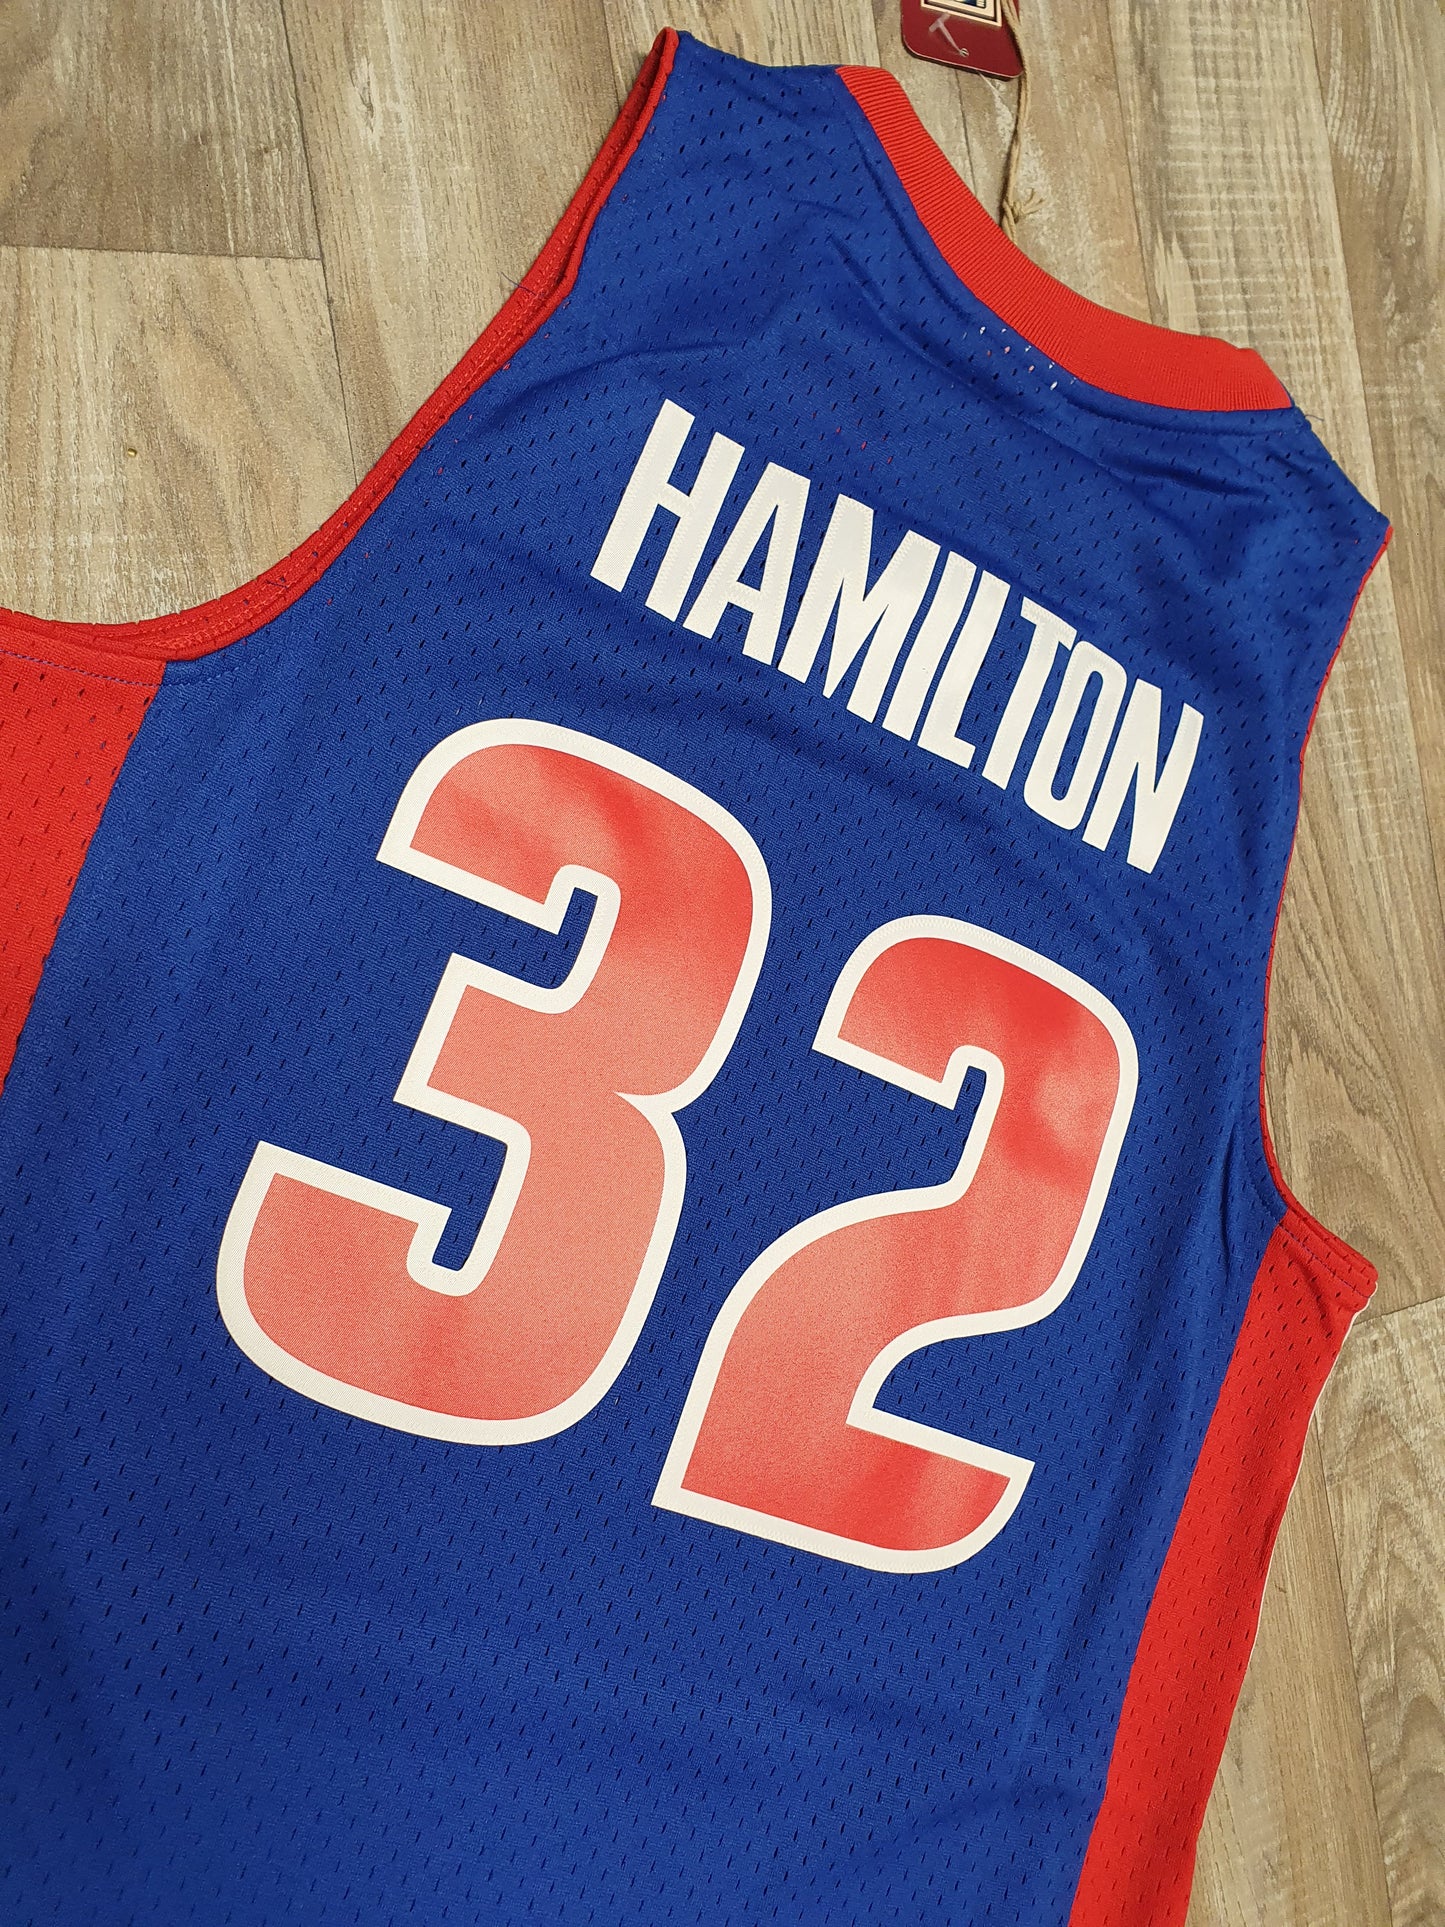 Rip Hamilton Detroit Pistons Road 2003-04 Jersey Size Medium